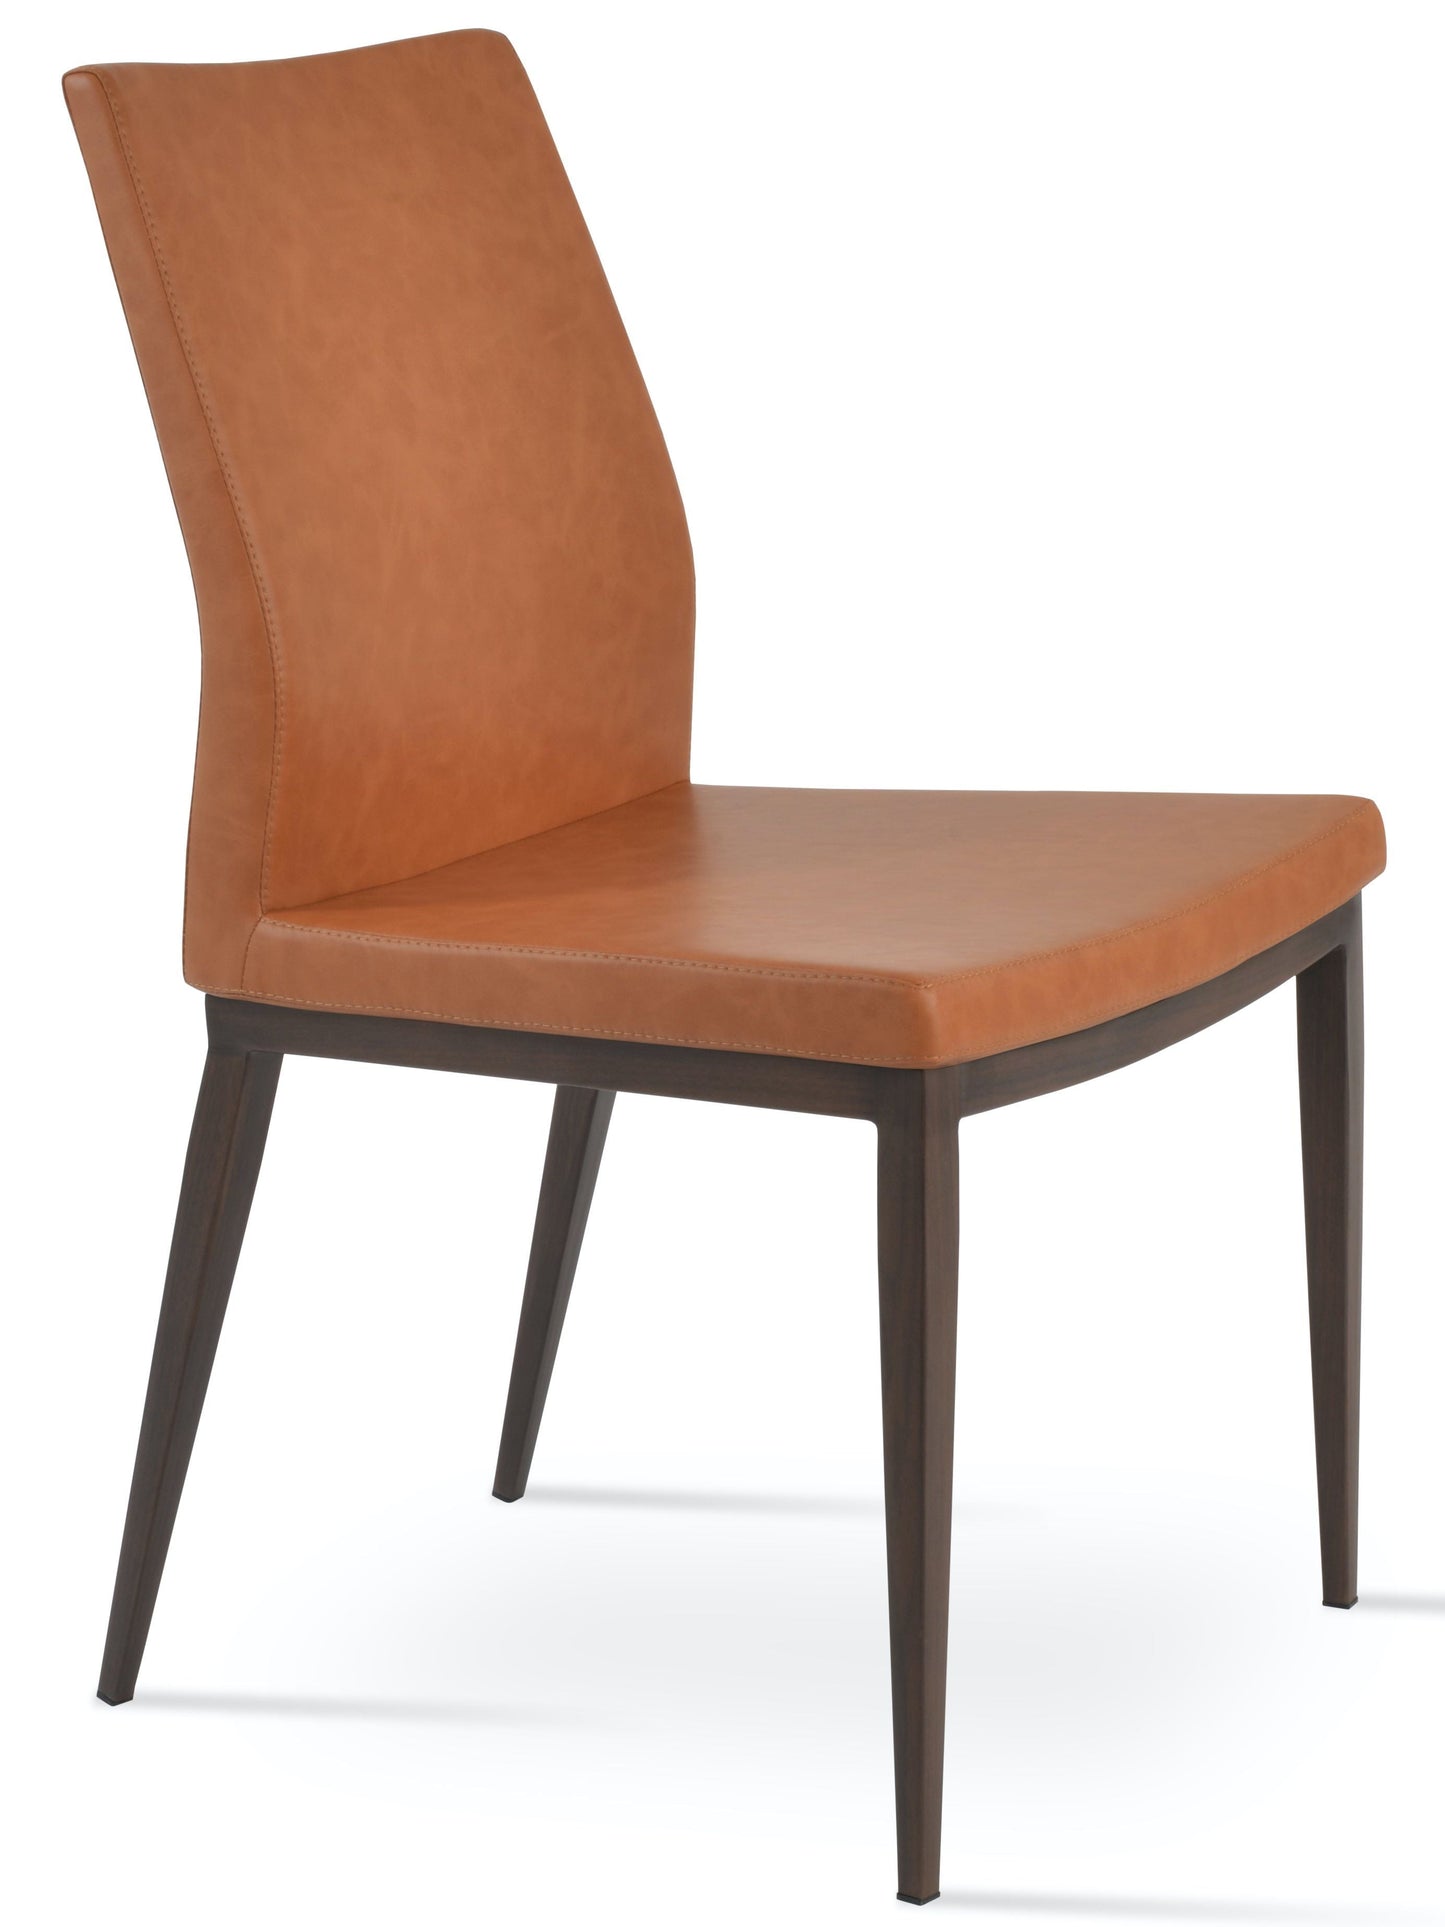 sohoConcept Pasha MW Chair Leather Flexible Back in American Walnut